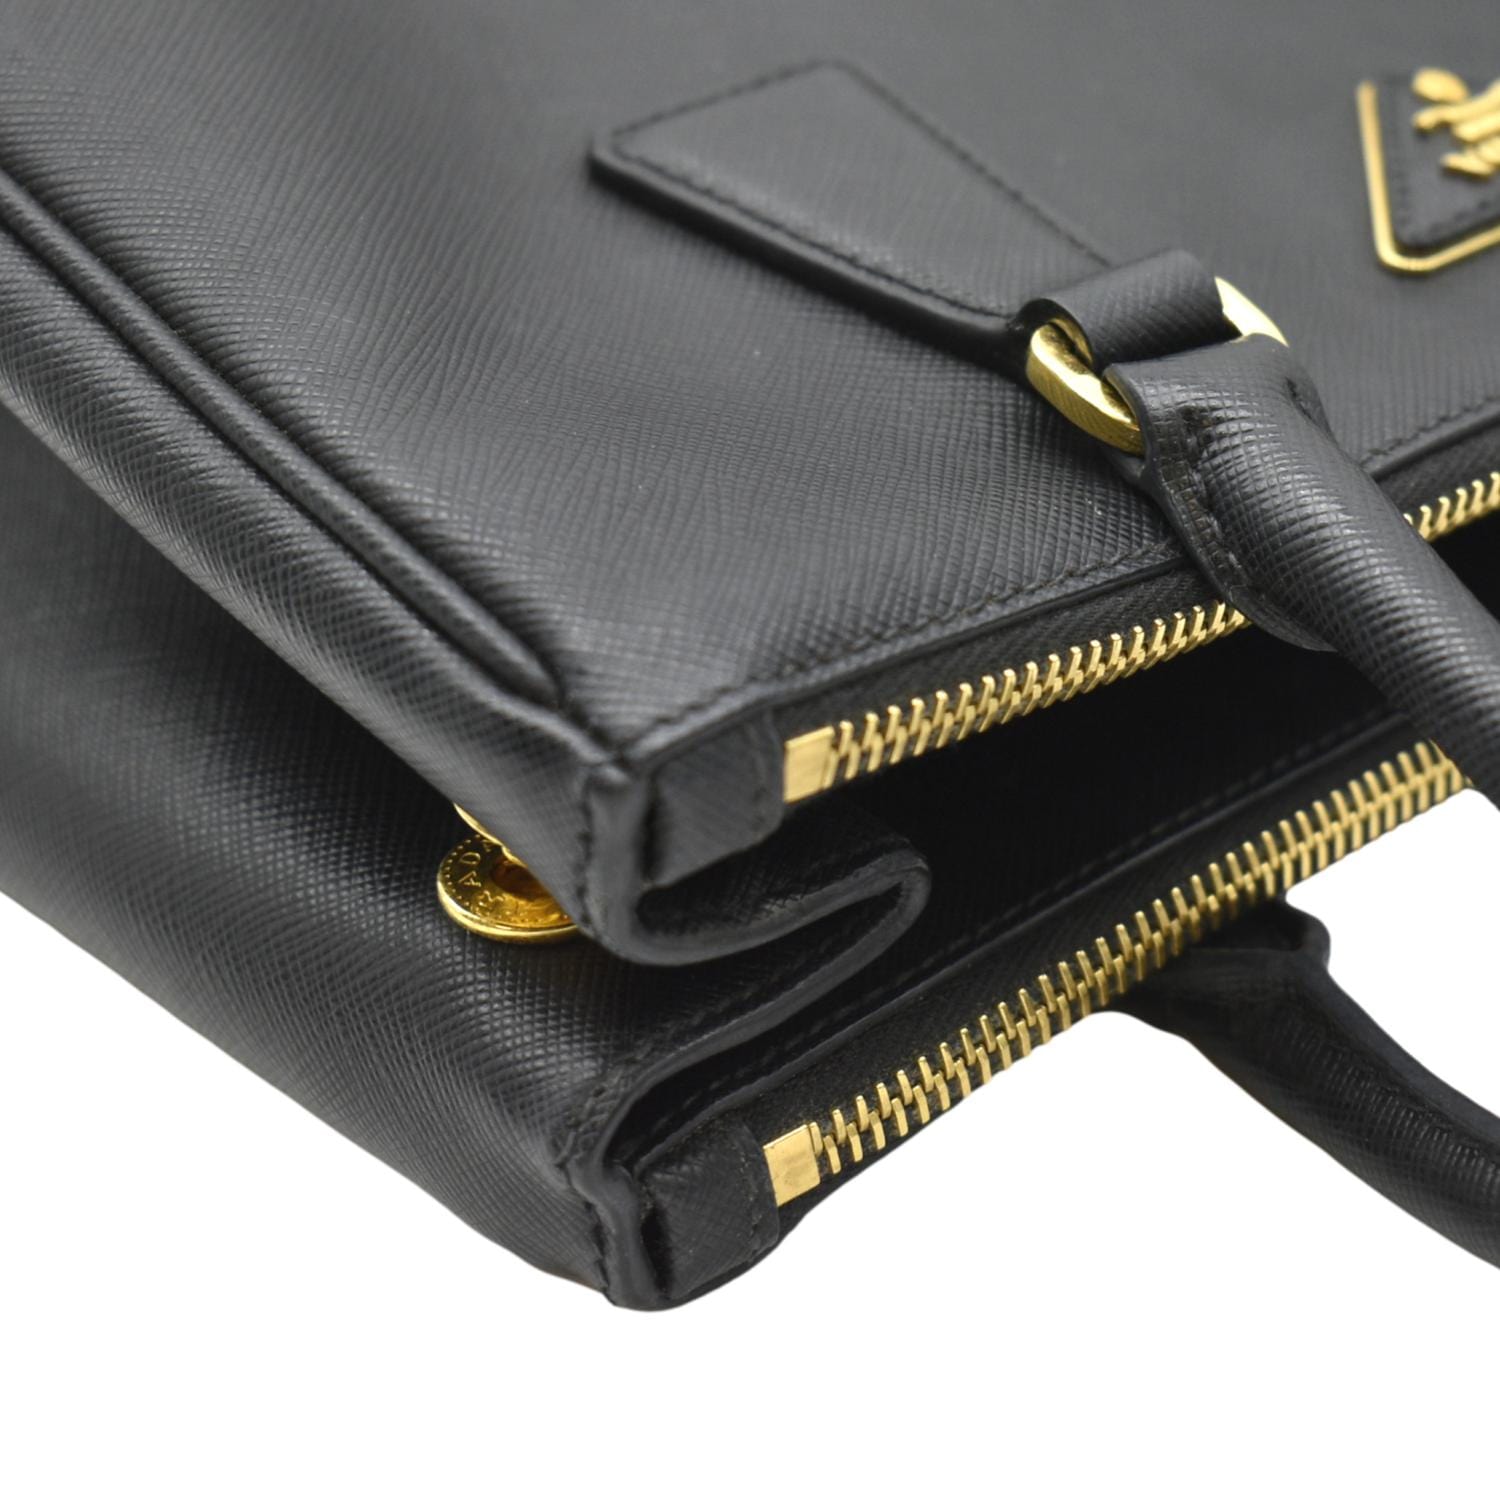 PRADA Double Handle Saffiano Leather Tote Bag Grey